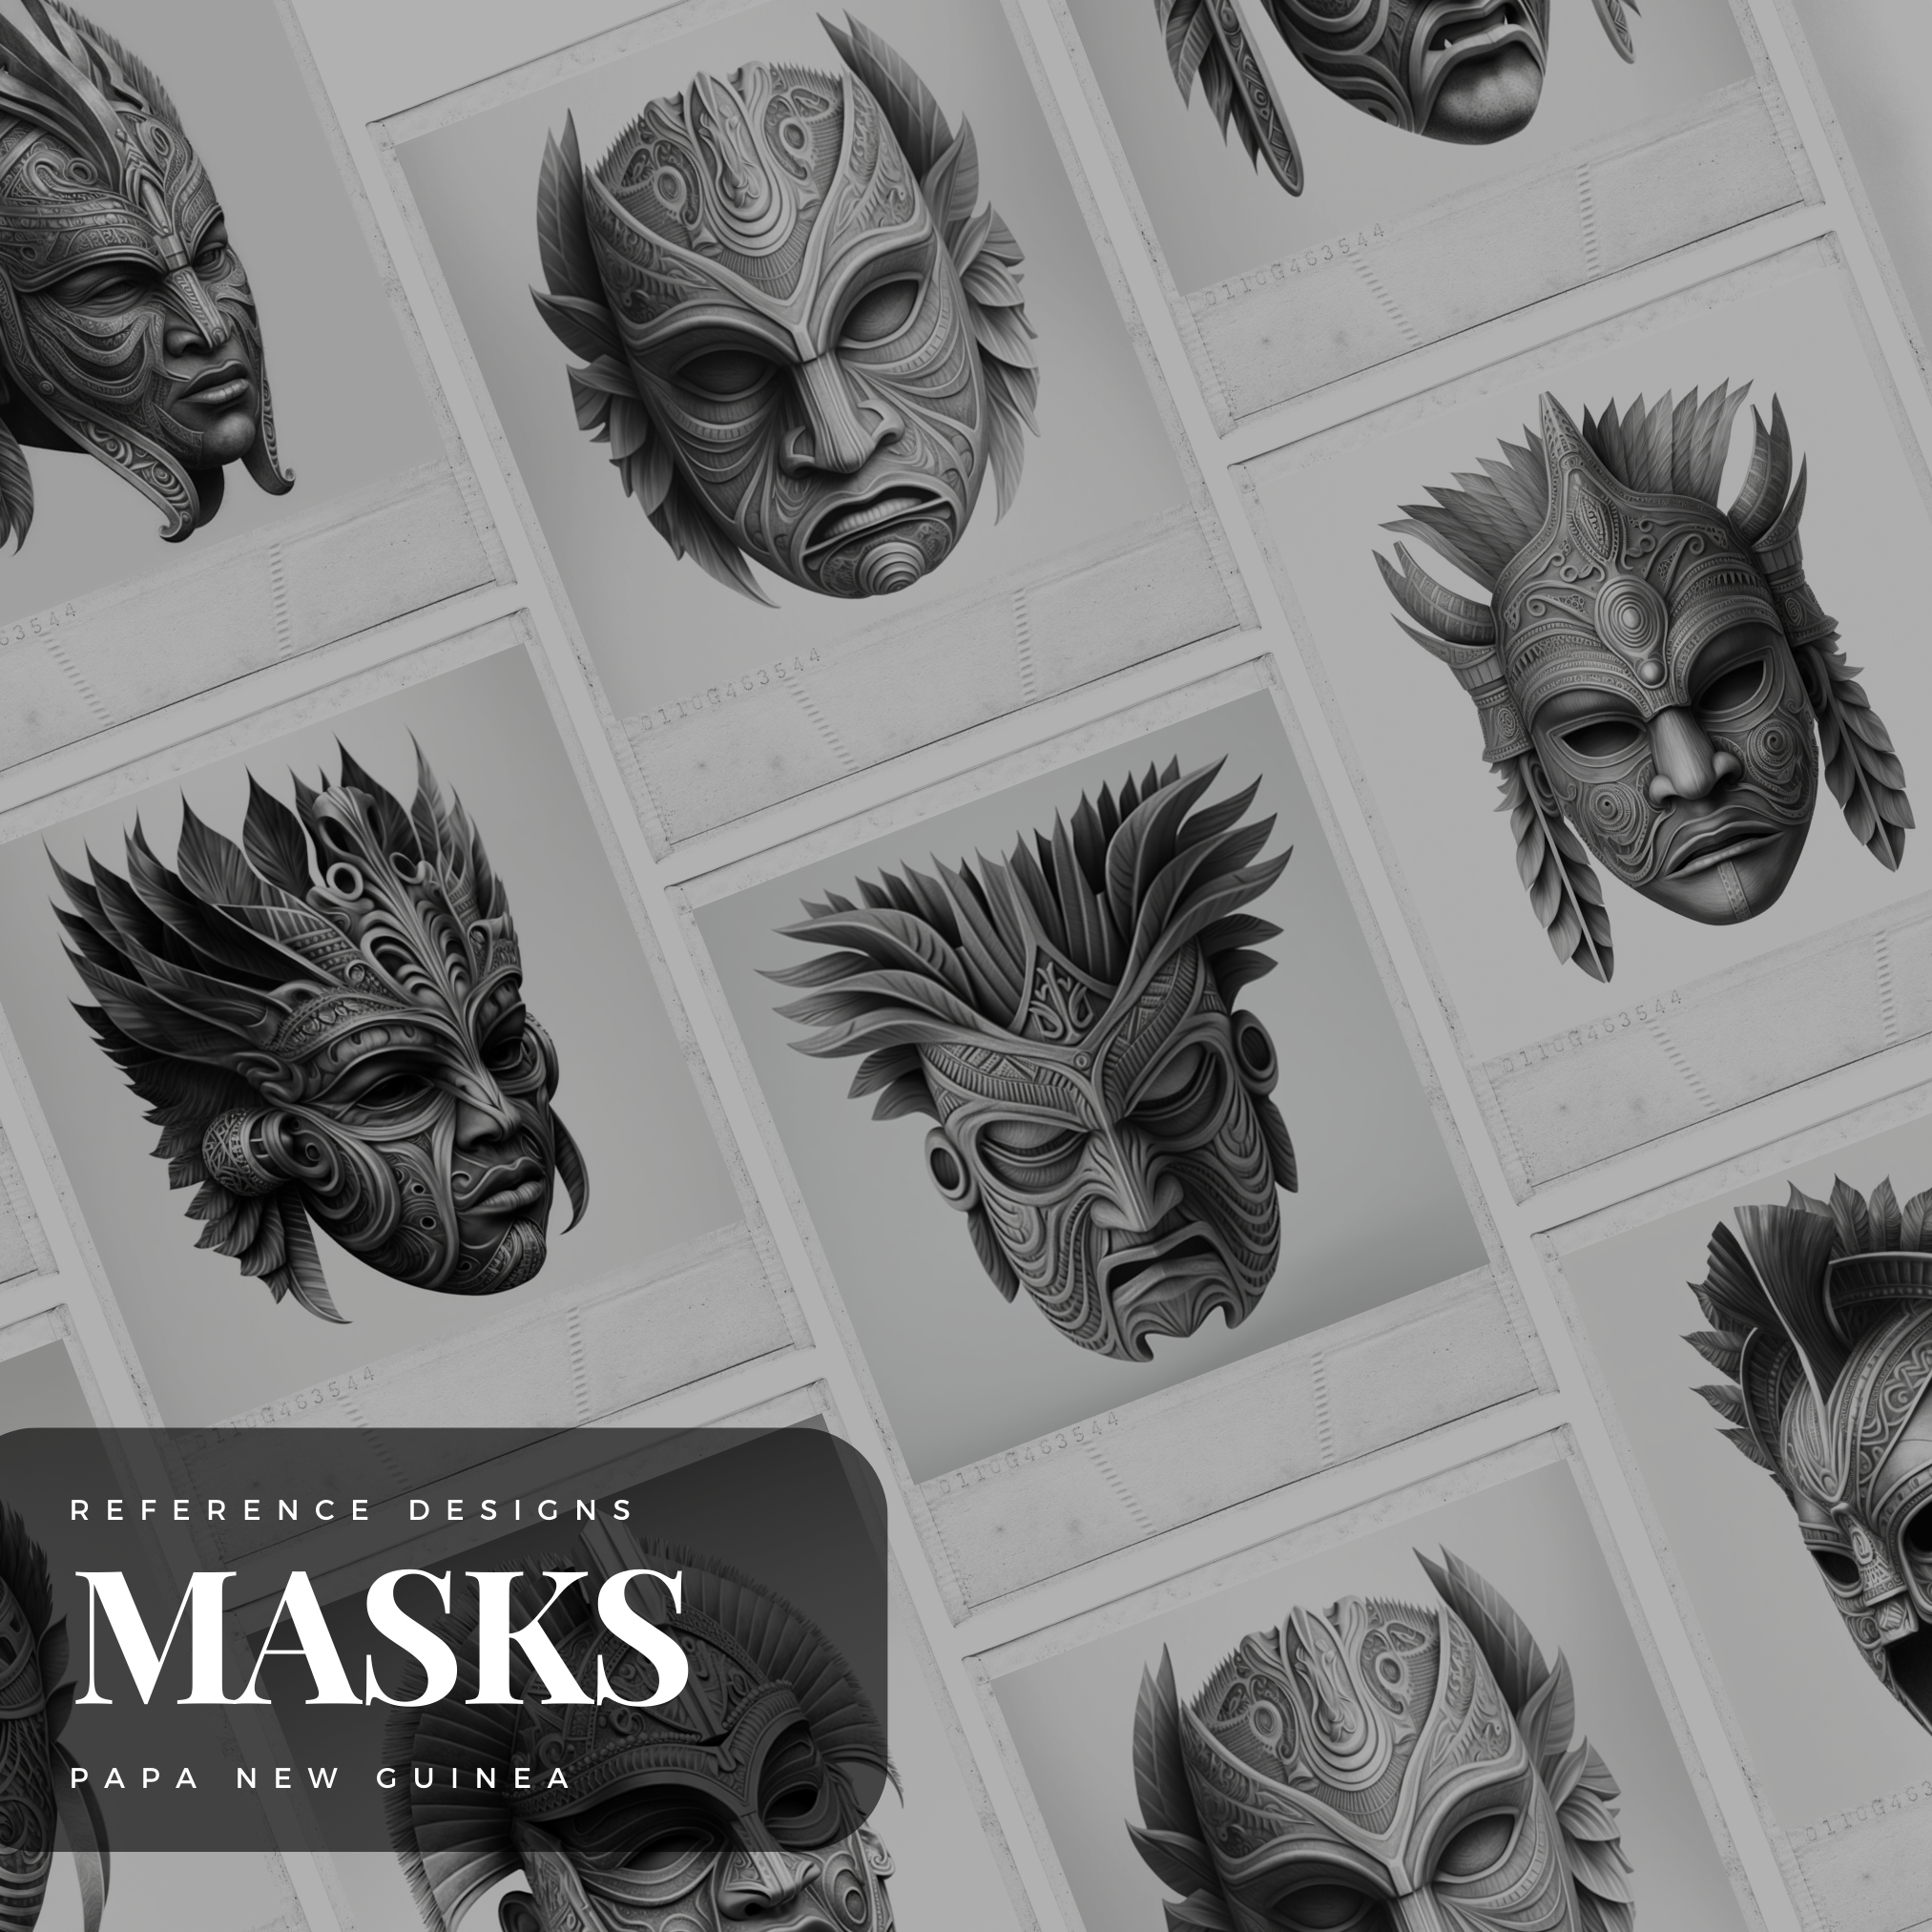 Papua New Guinea Masks Digital Reference Design Collection: 50 Procreate & Sketchbook Images